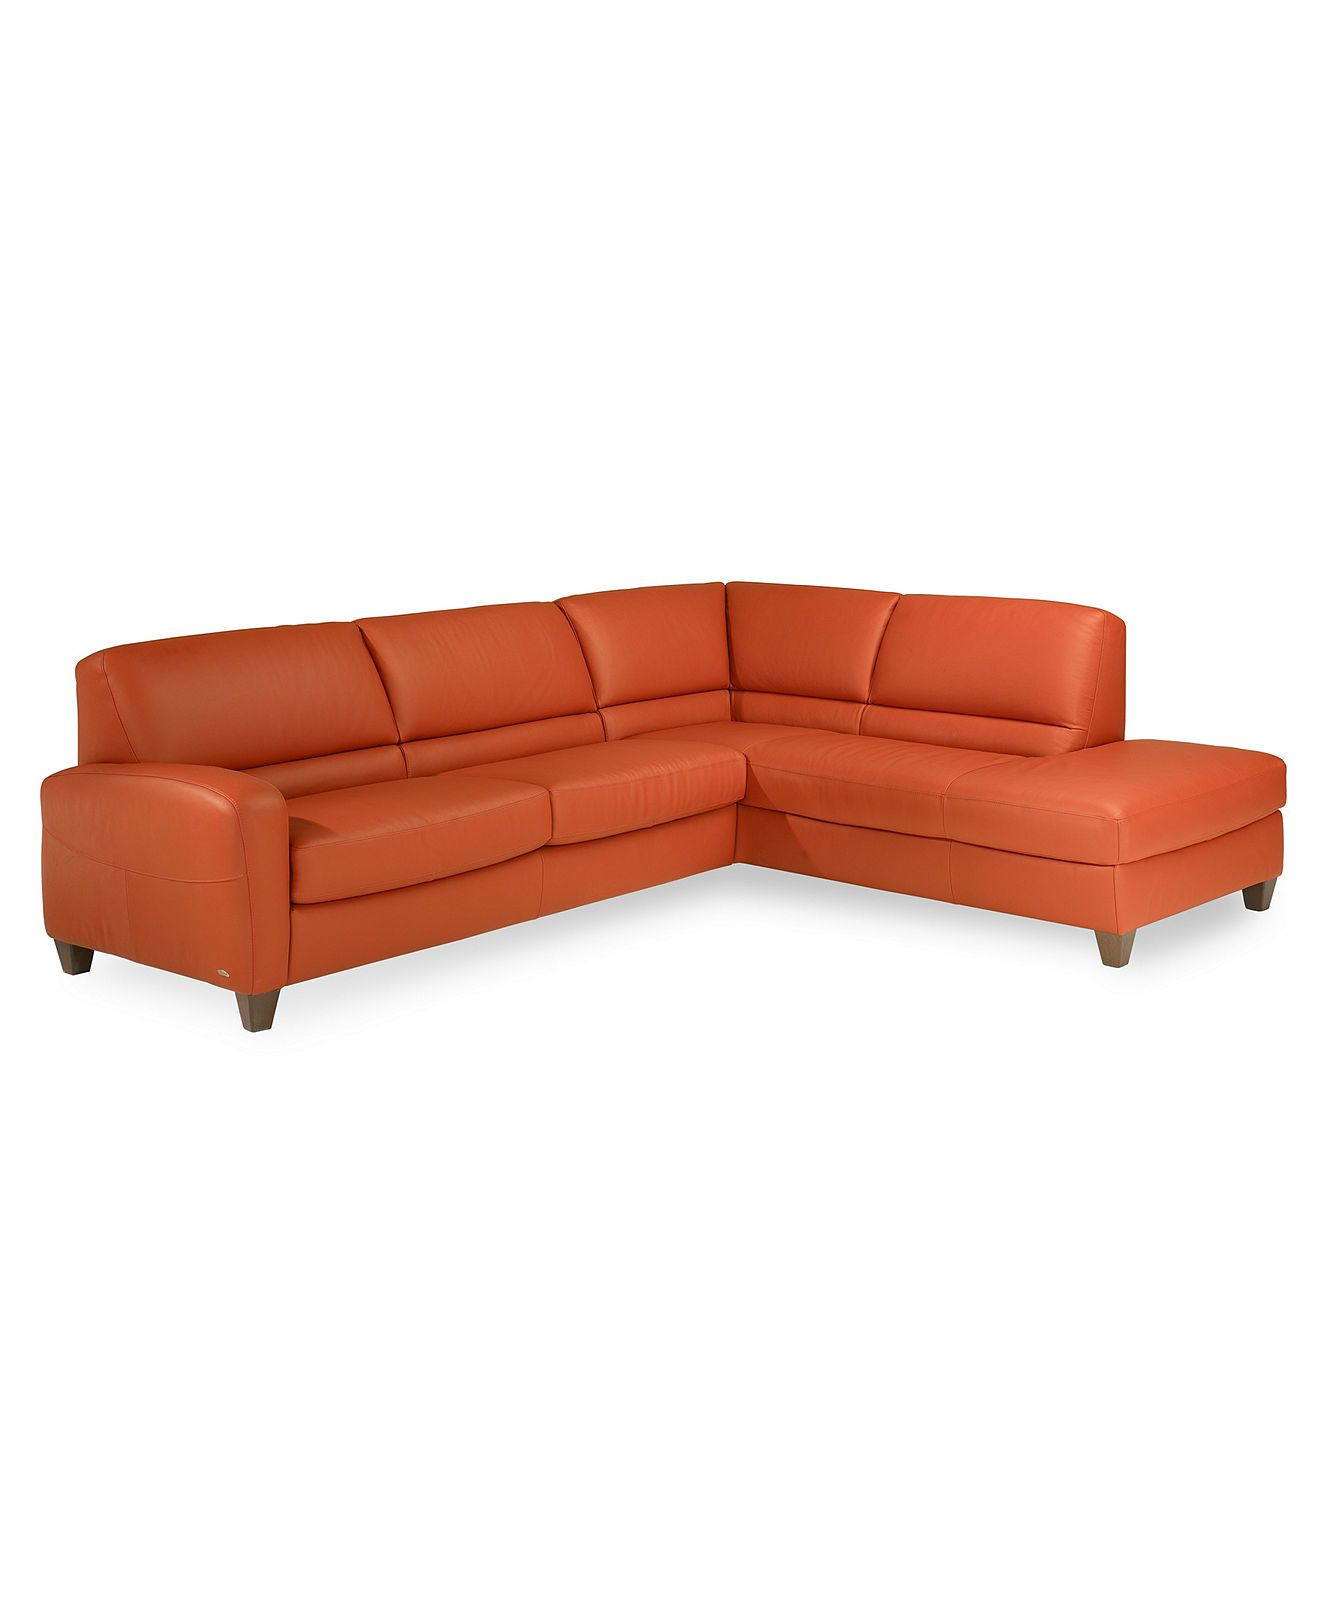 Leather sectional sleeper sofa